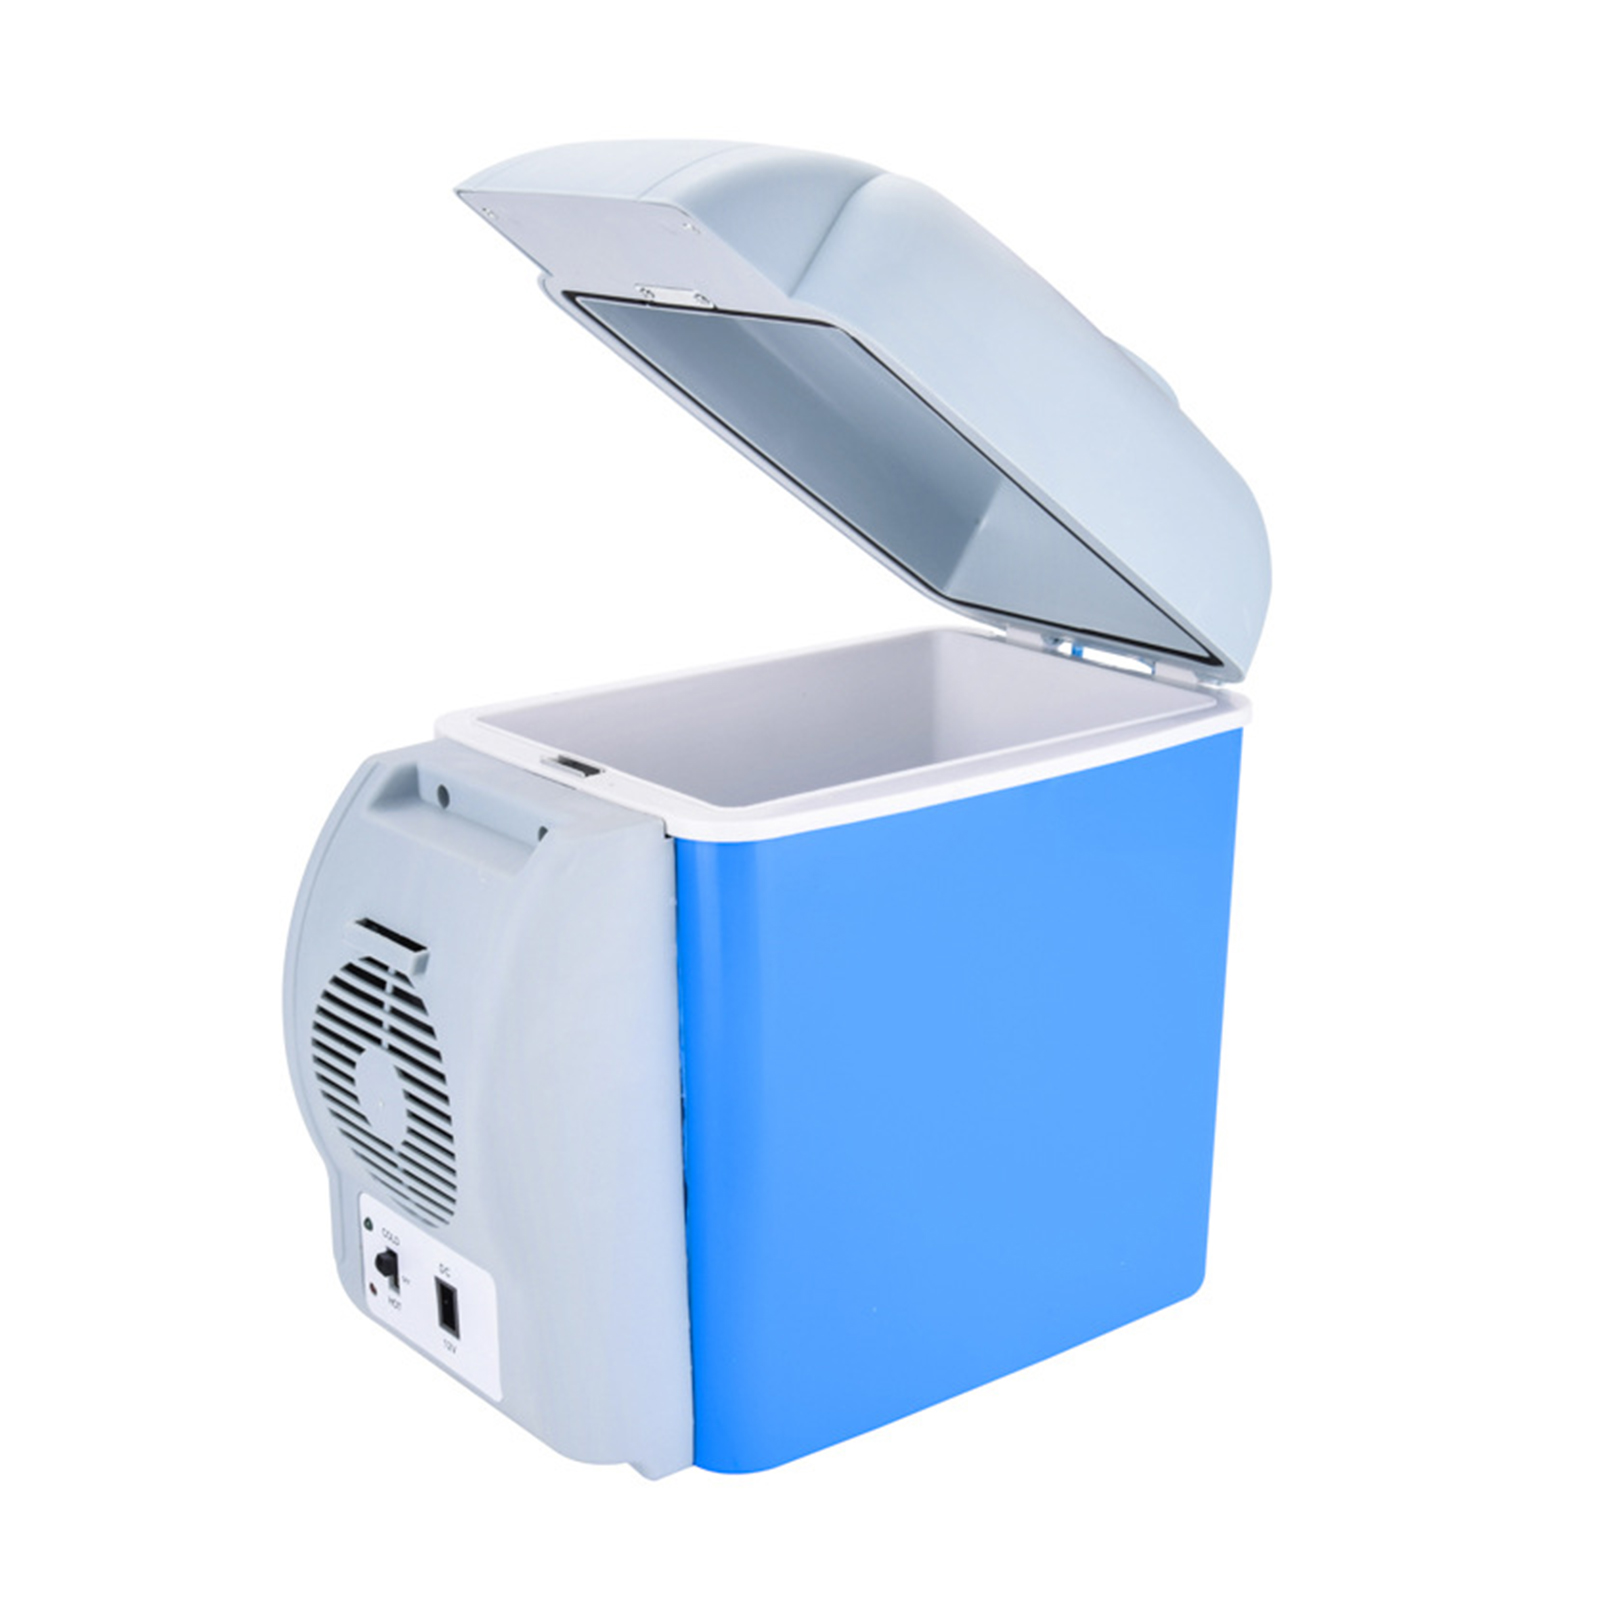 Andoer 7.5L Portable Mini Car Refrigerator $38.59 + Free Shipping w/ Walmart+ or orders $35+